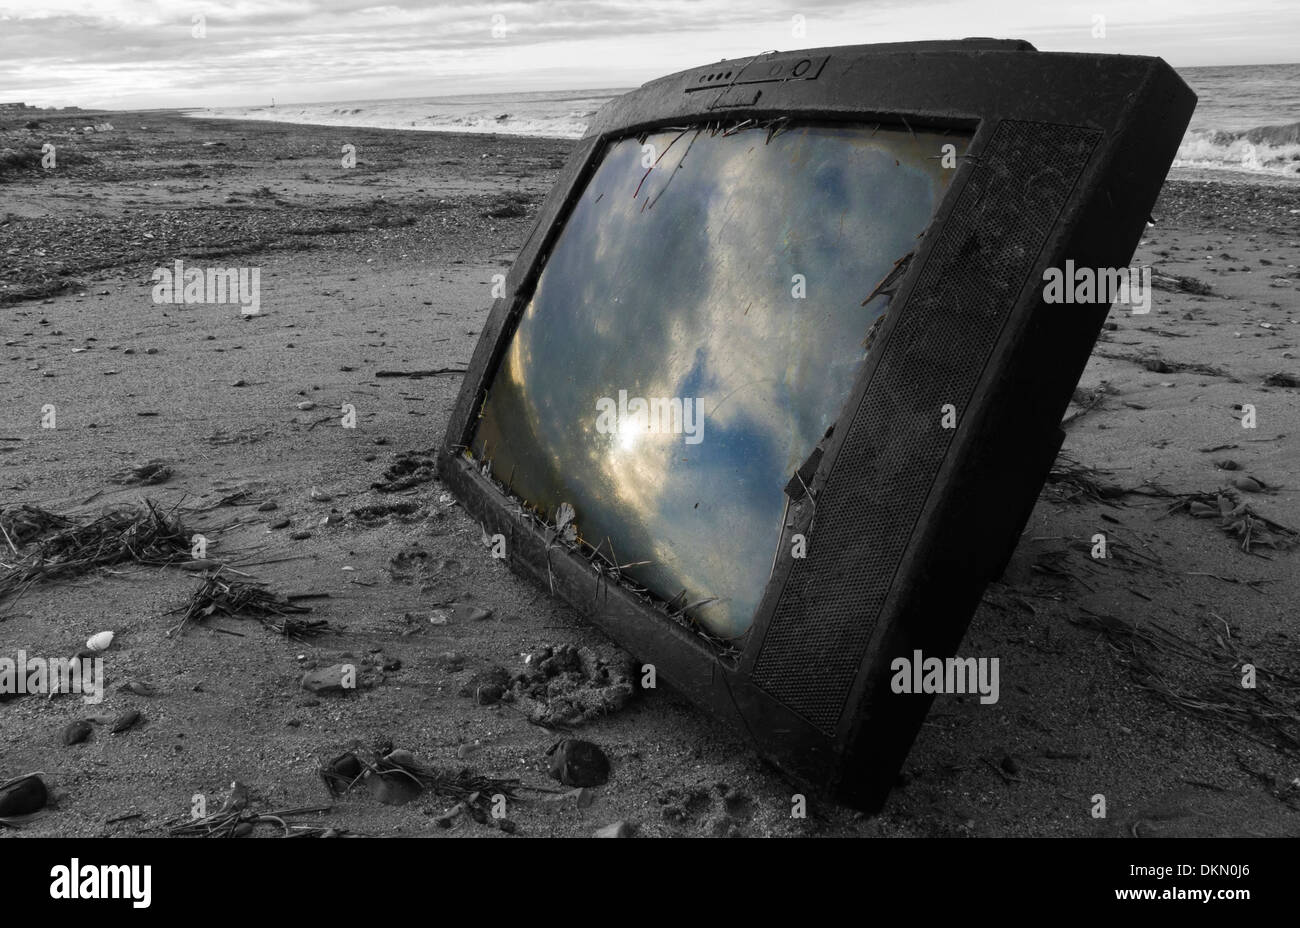 TV-Gerät an einen Strand gespült. Stockfoto